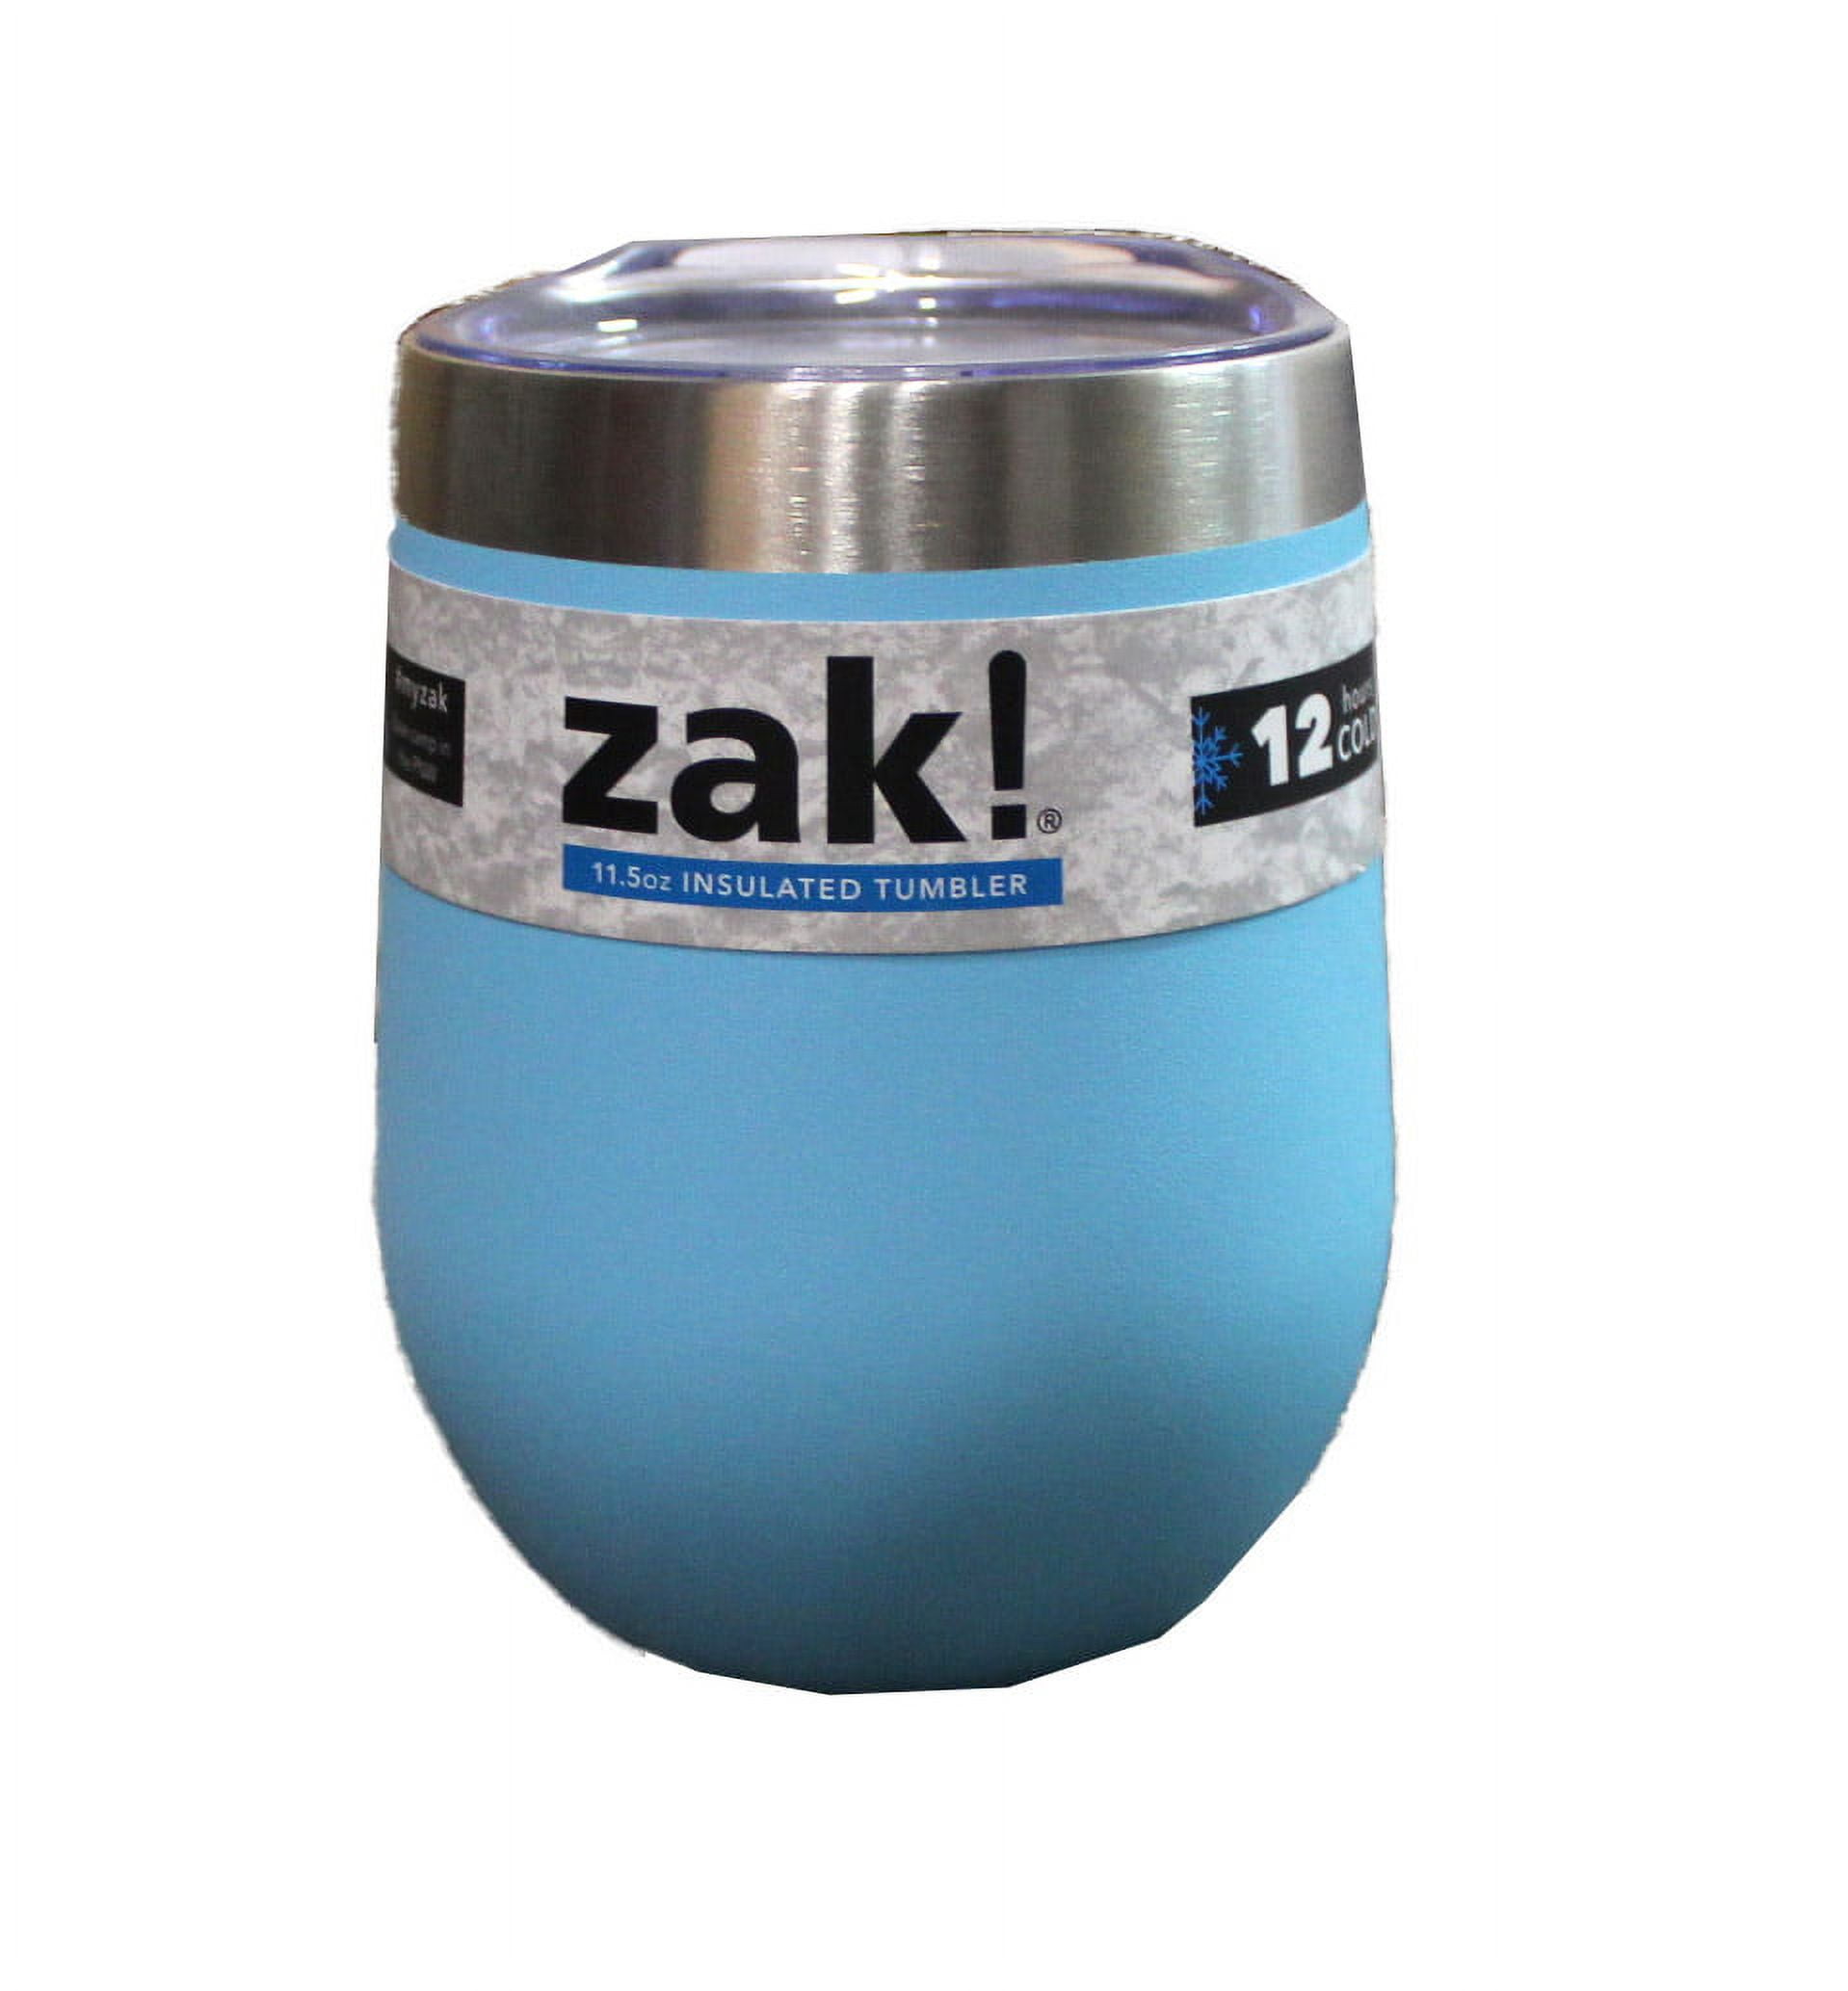 Zak insulated tumbler - Mpayo HealthCare Services